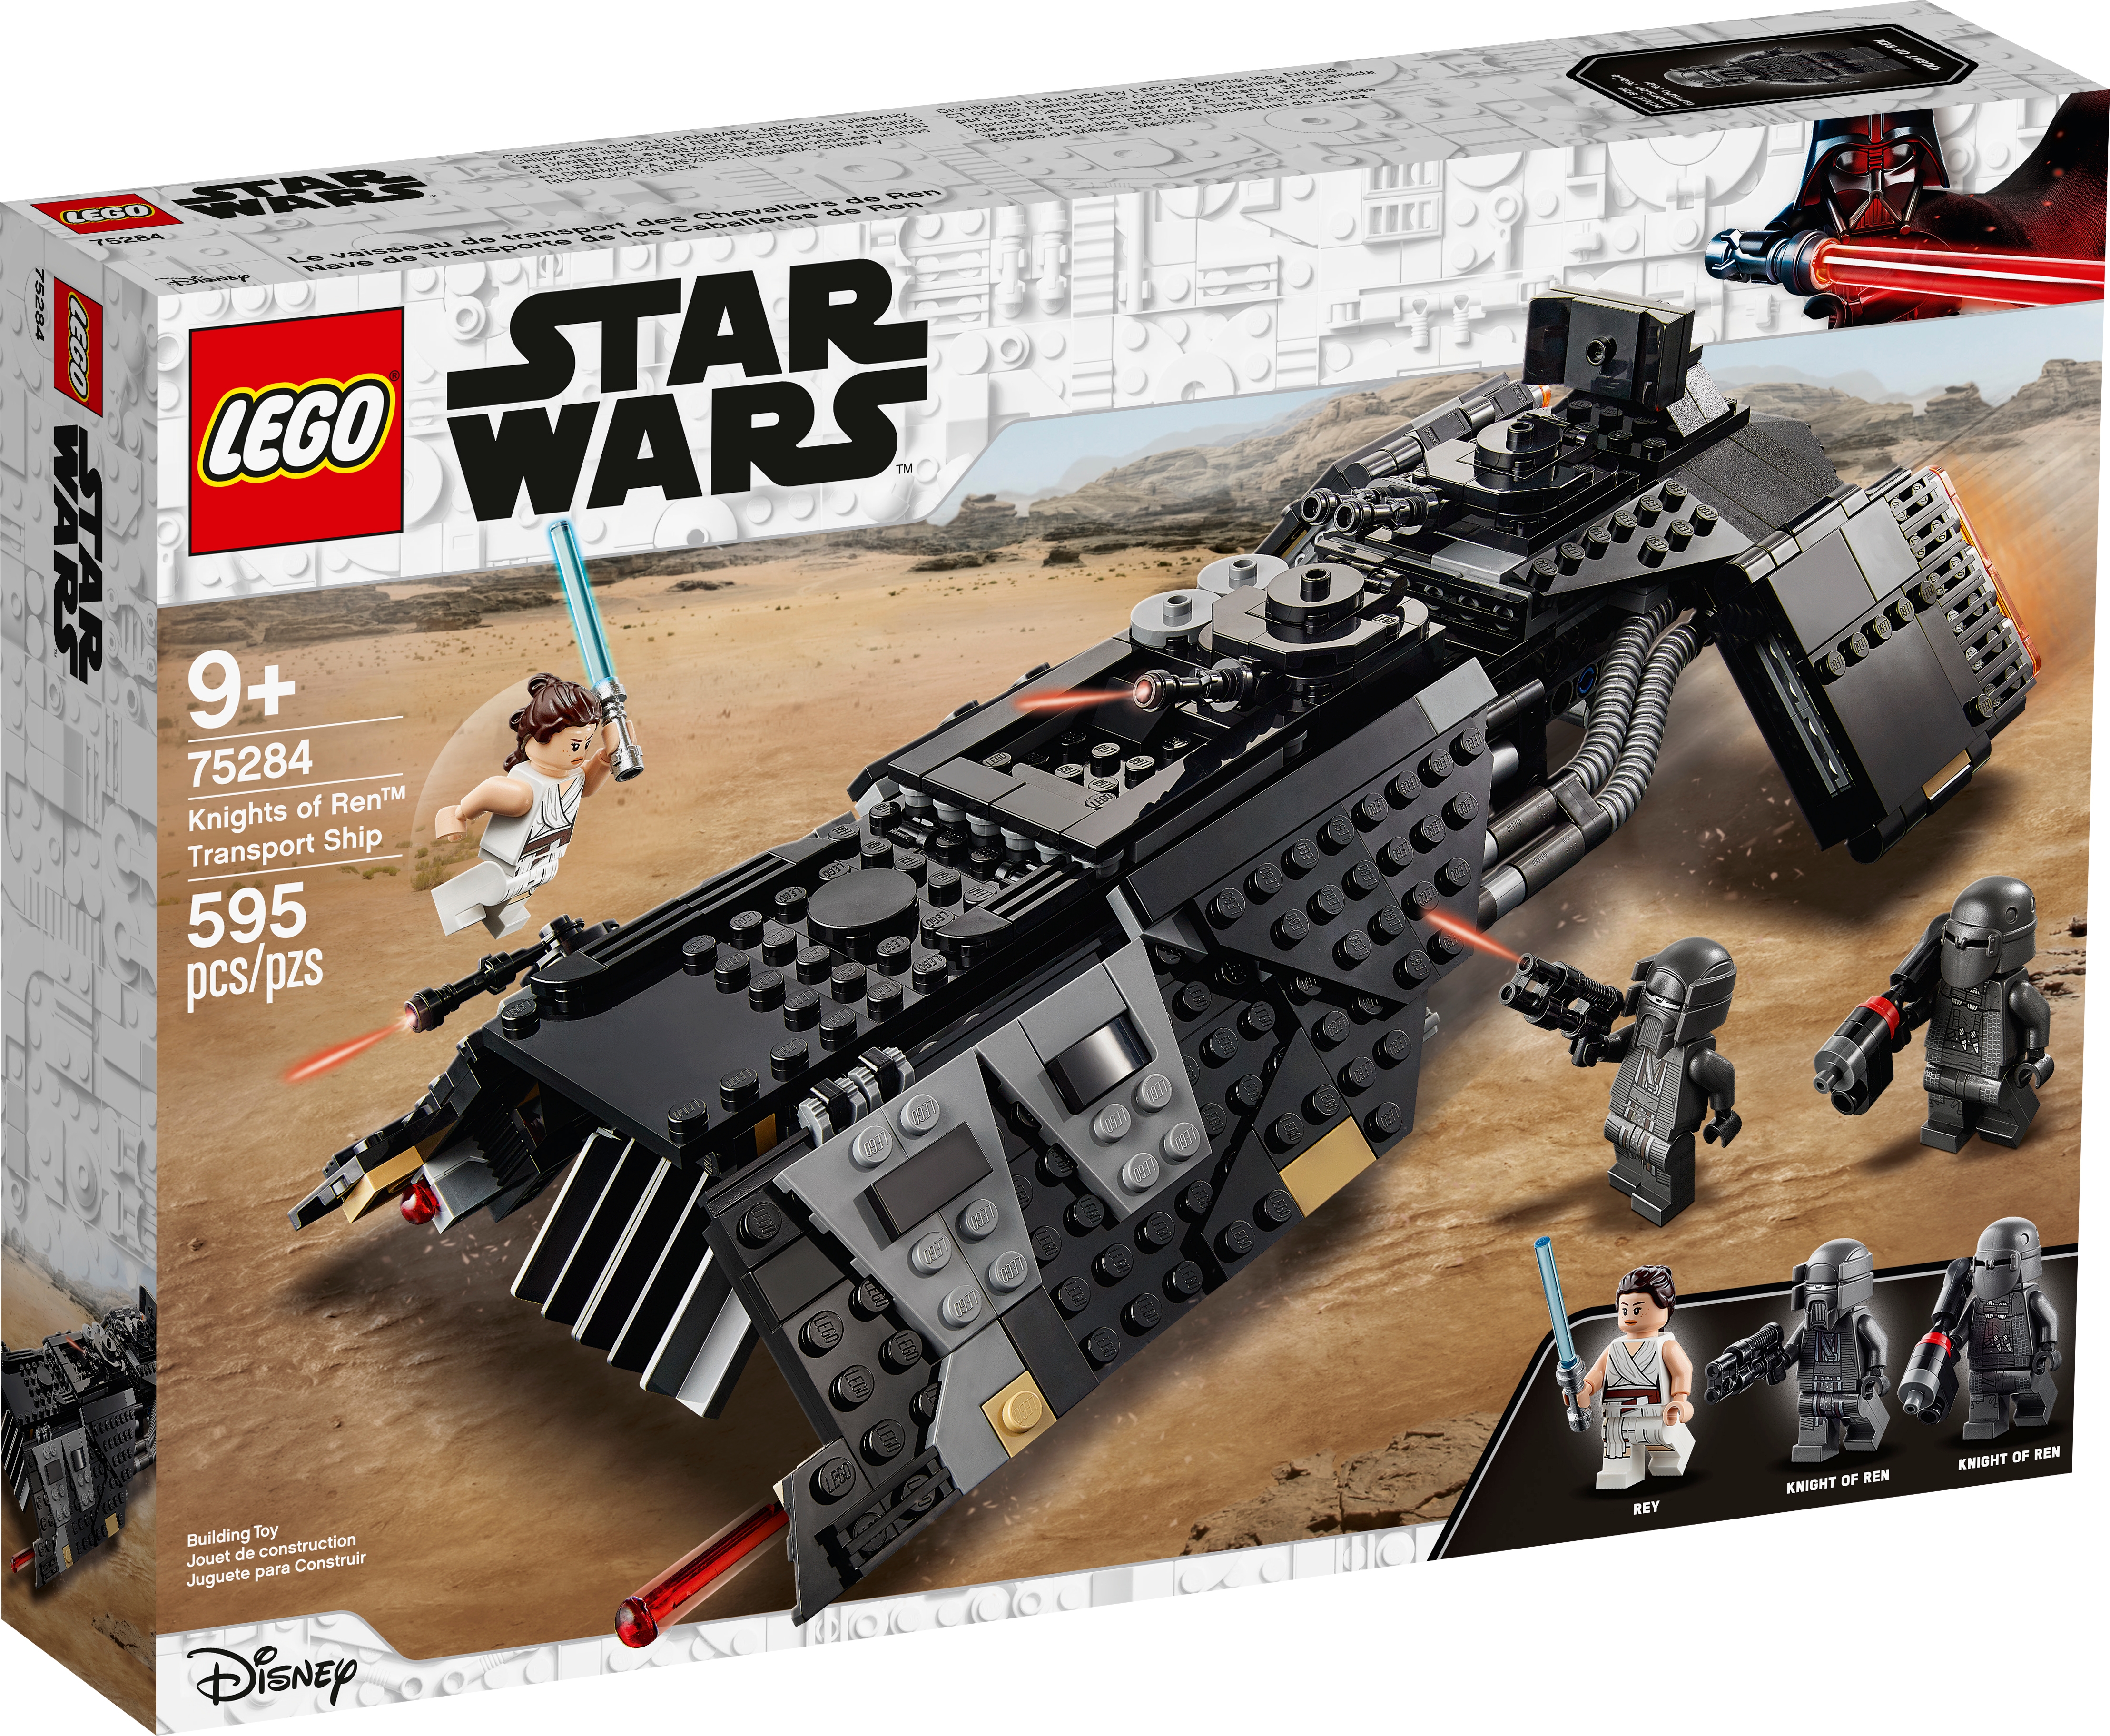 FROM SET 75284 STAR WARS EPISODE 9 NEW LEGO Knight of Ren Cardo sw1099 